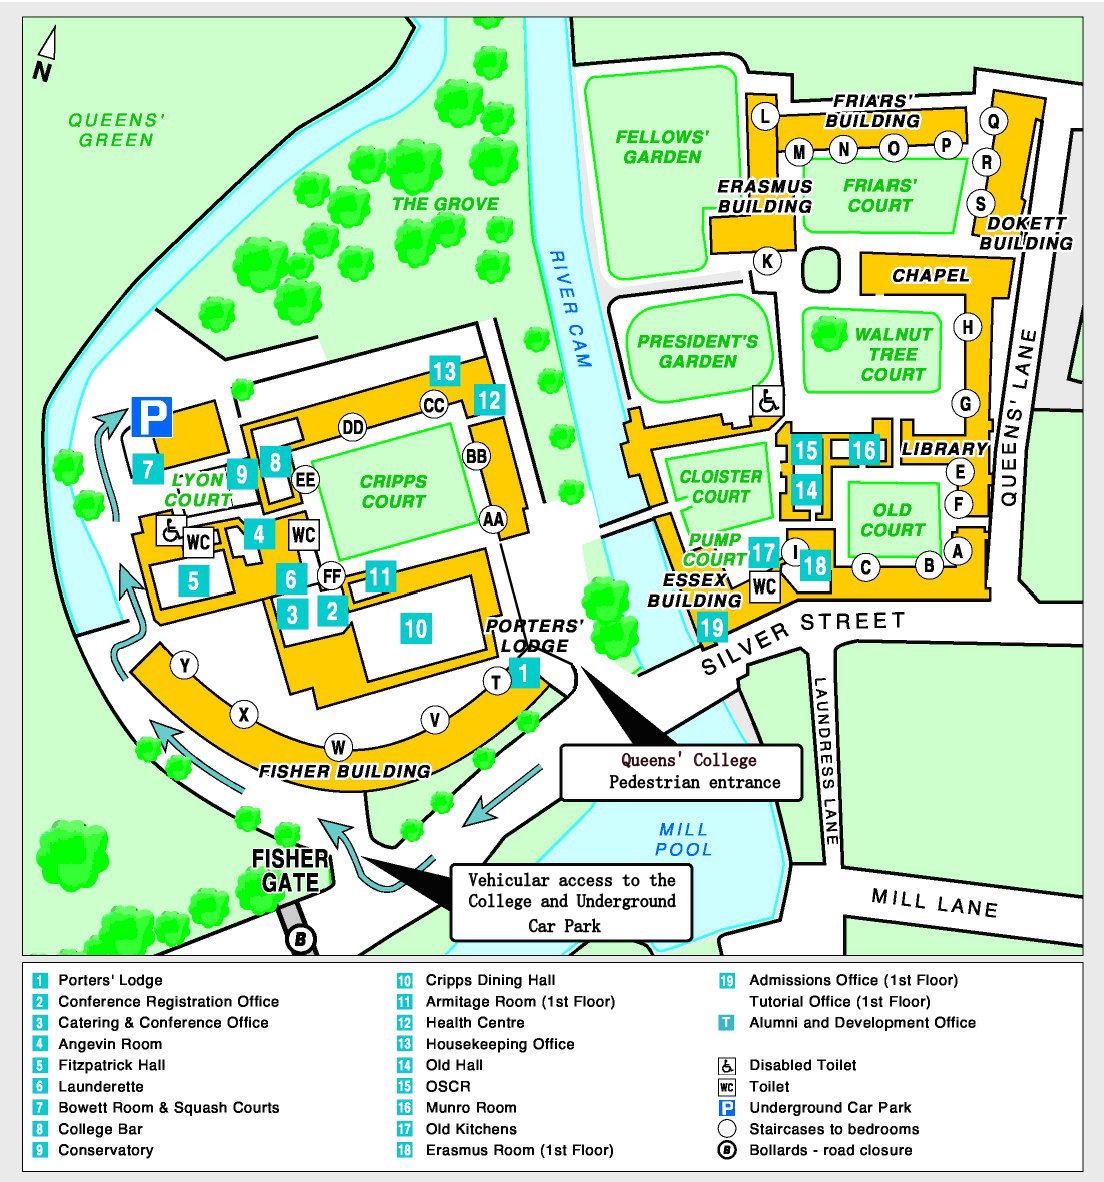 Queens' College site map - 2015